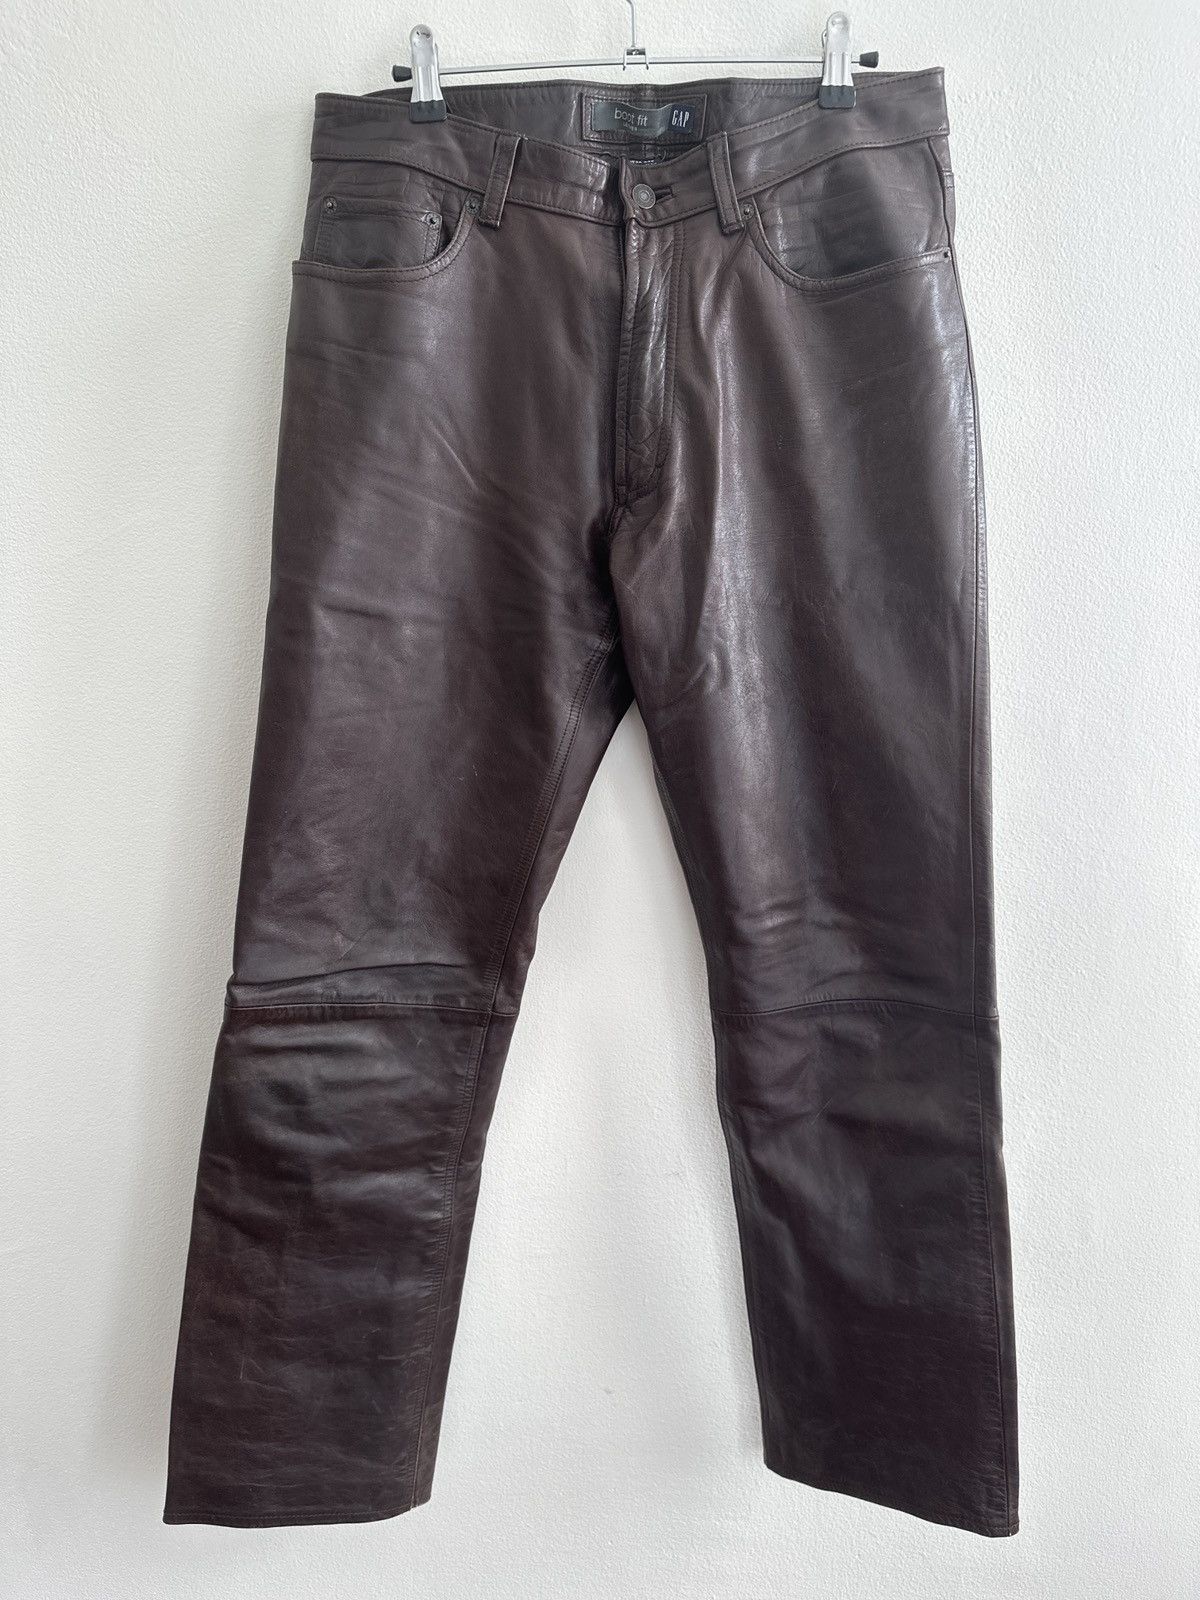 Vintage Vintage Gap Brown Bootcut Leather Pants Size US 32 / EU 48 - 1 Preview